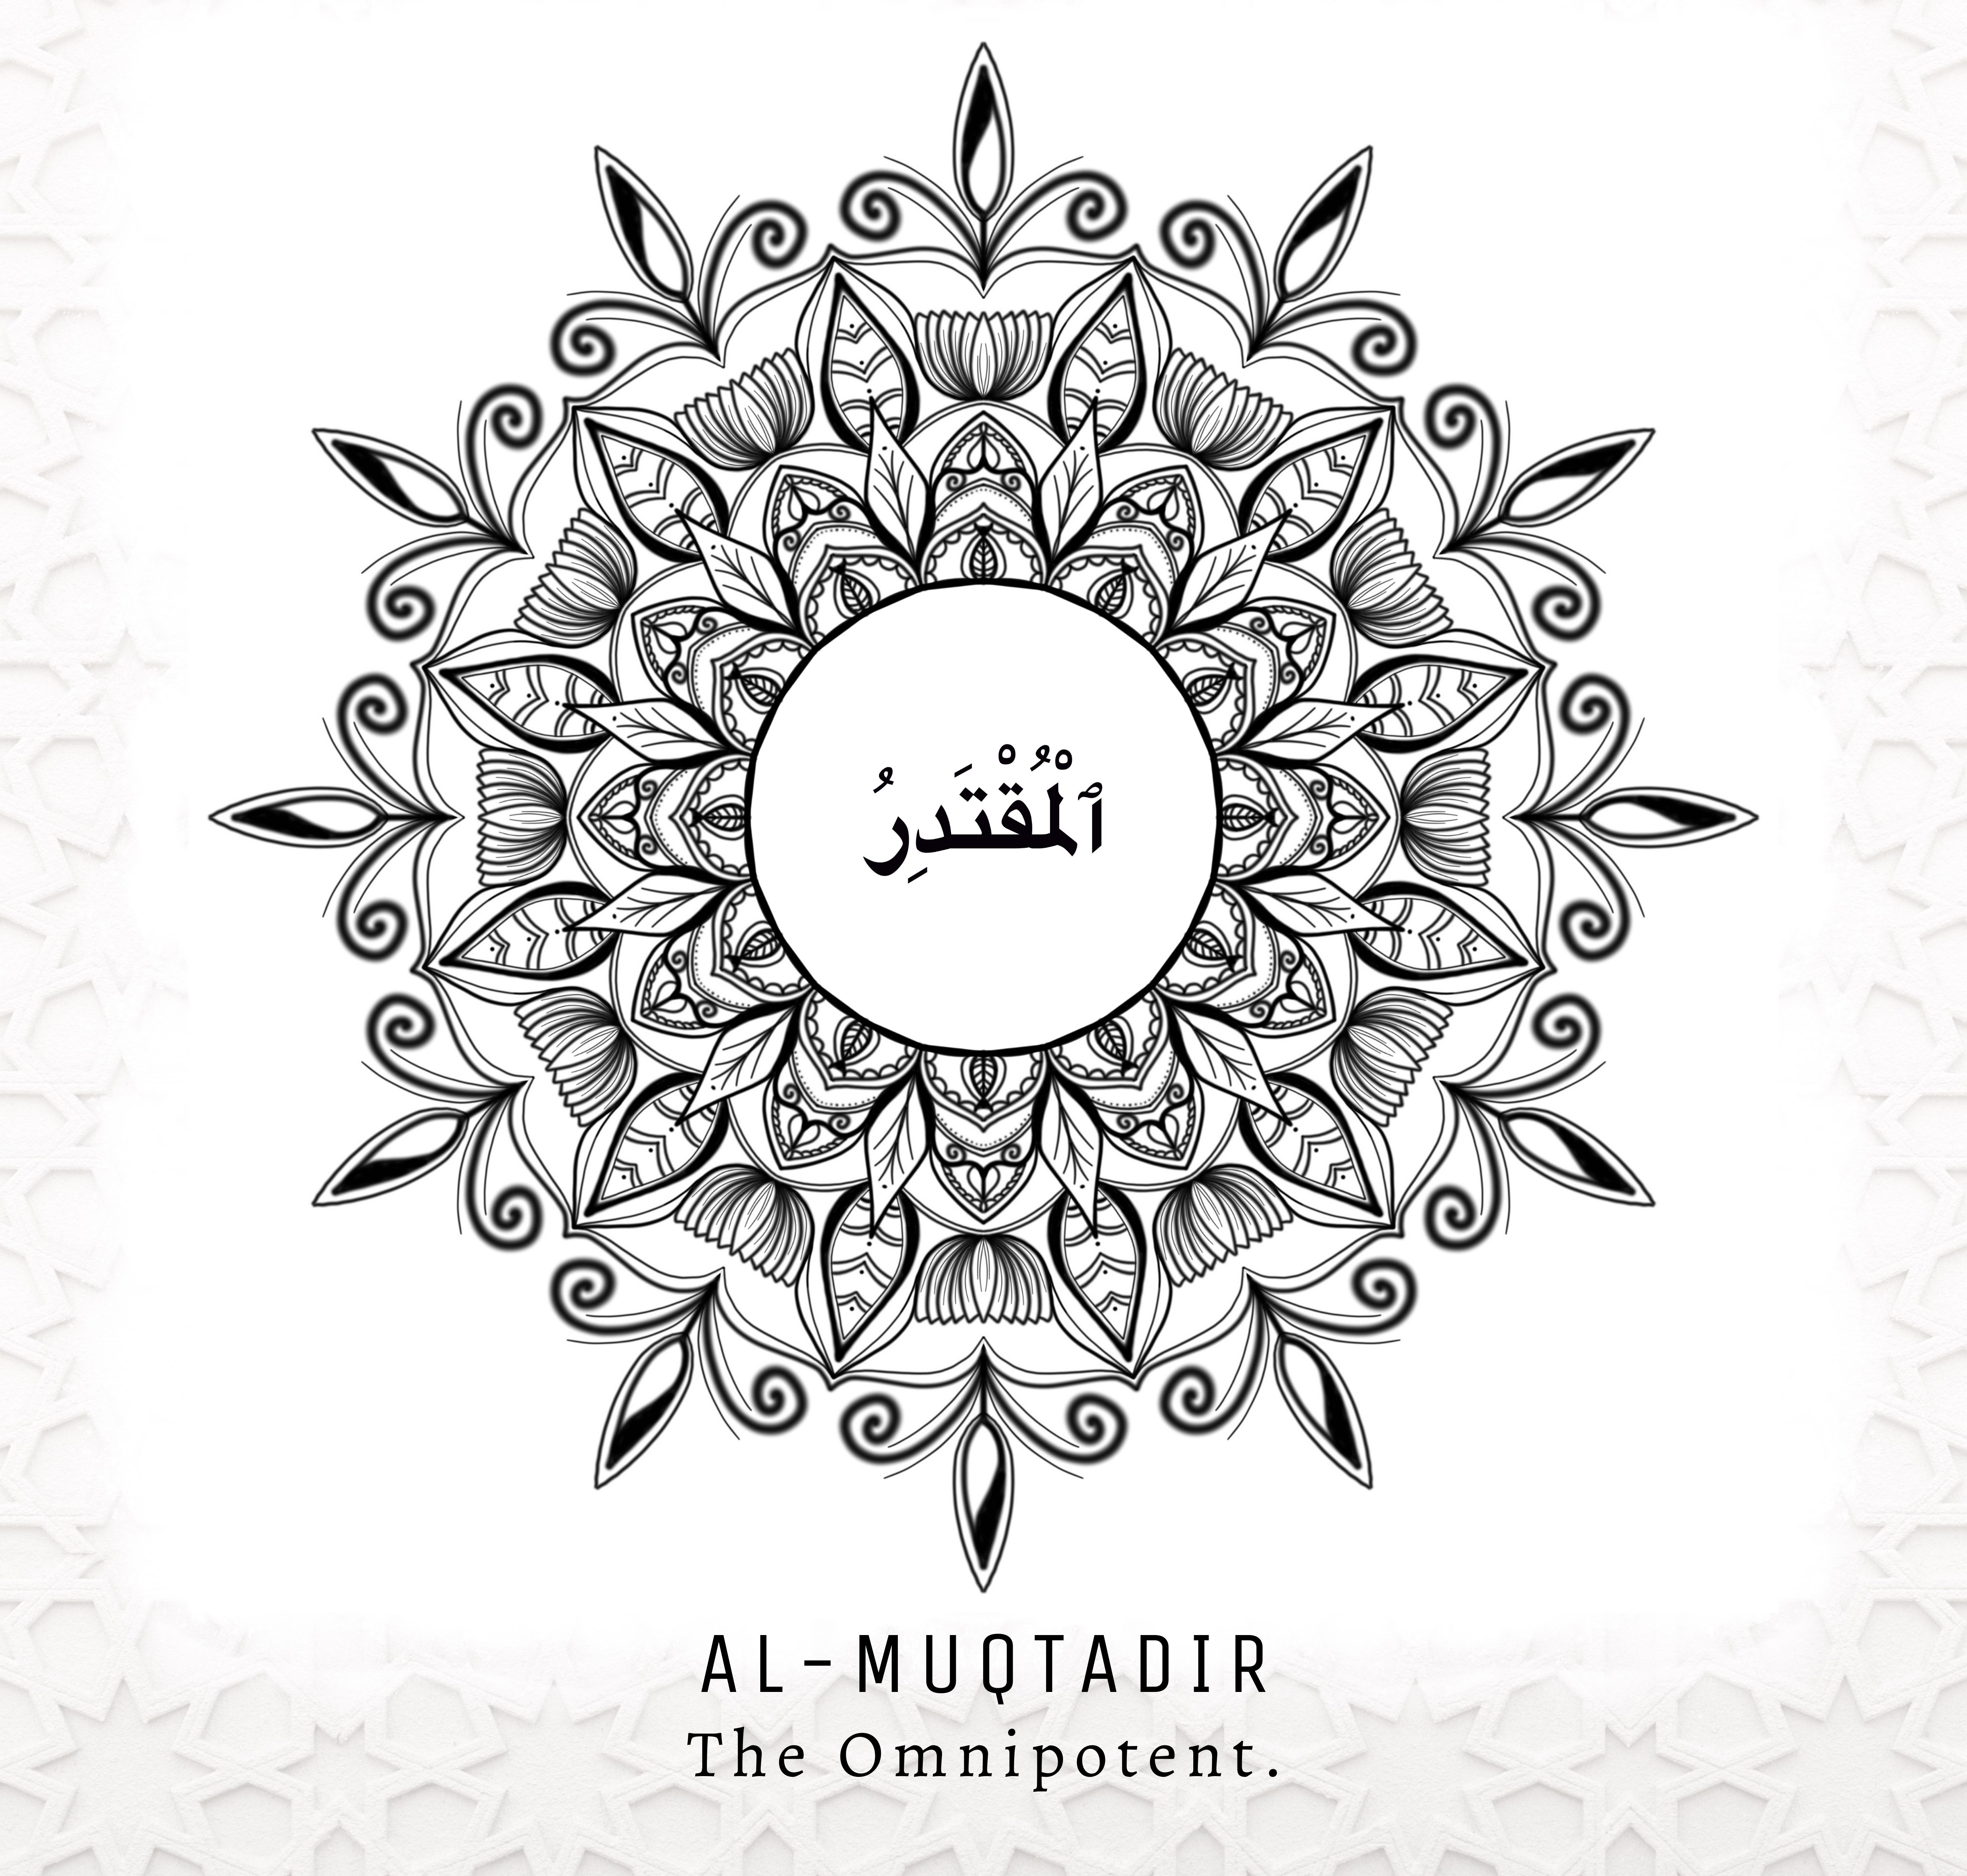 "AL-MUQTADIR" #474